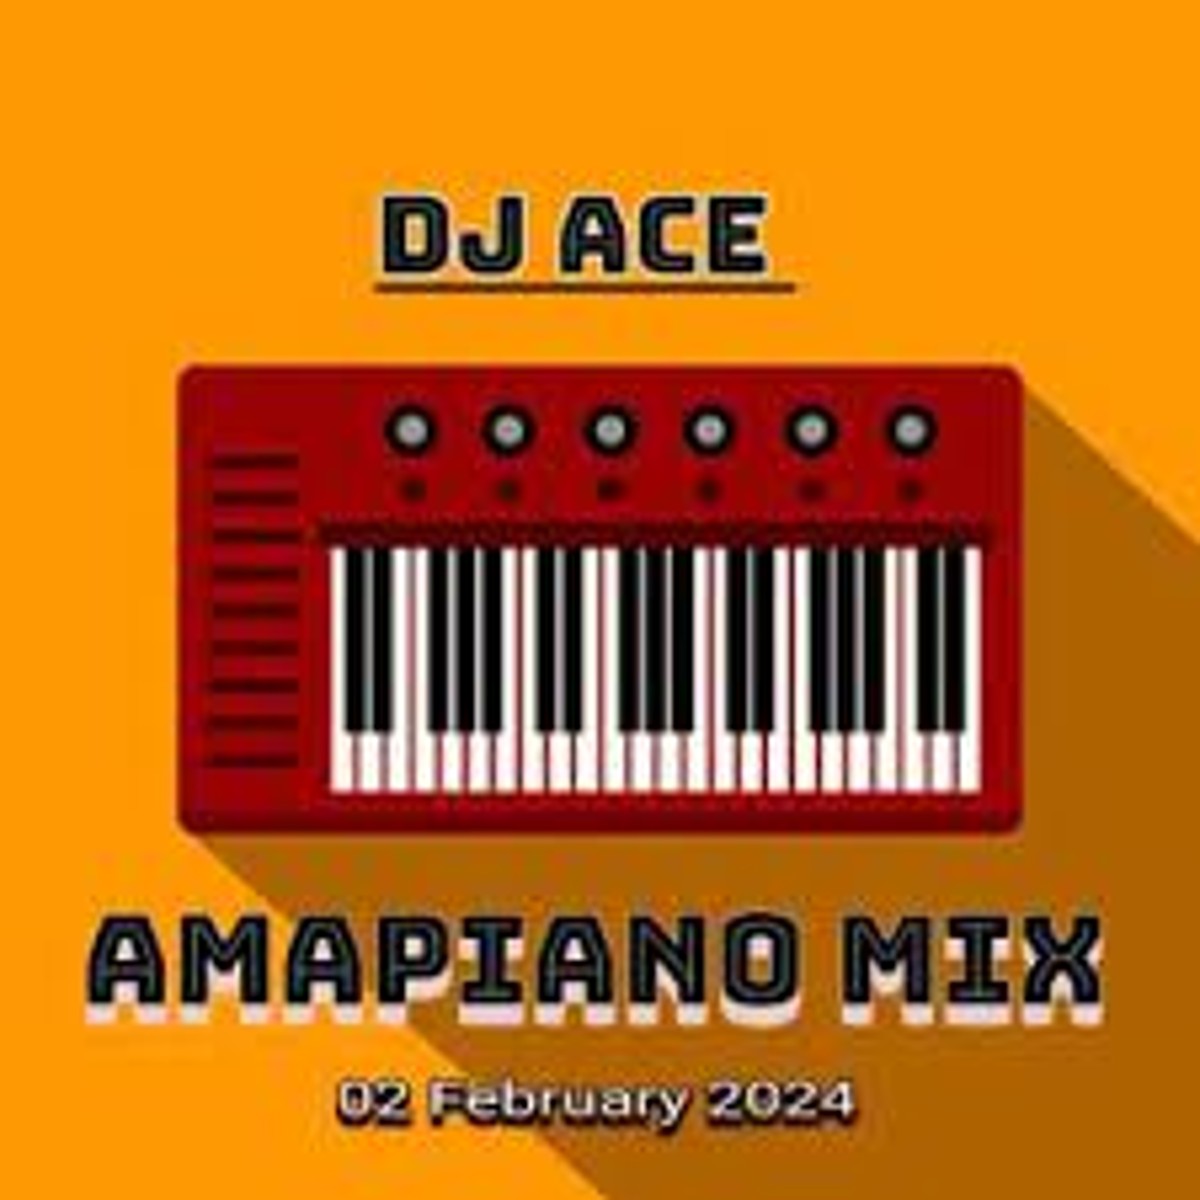 DJ Ace – 02 February 2024 (Amapiano Mix) Mp3 Download Fakaza: